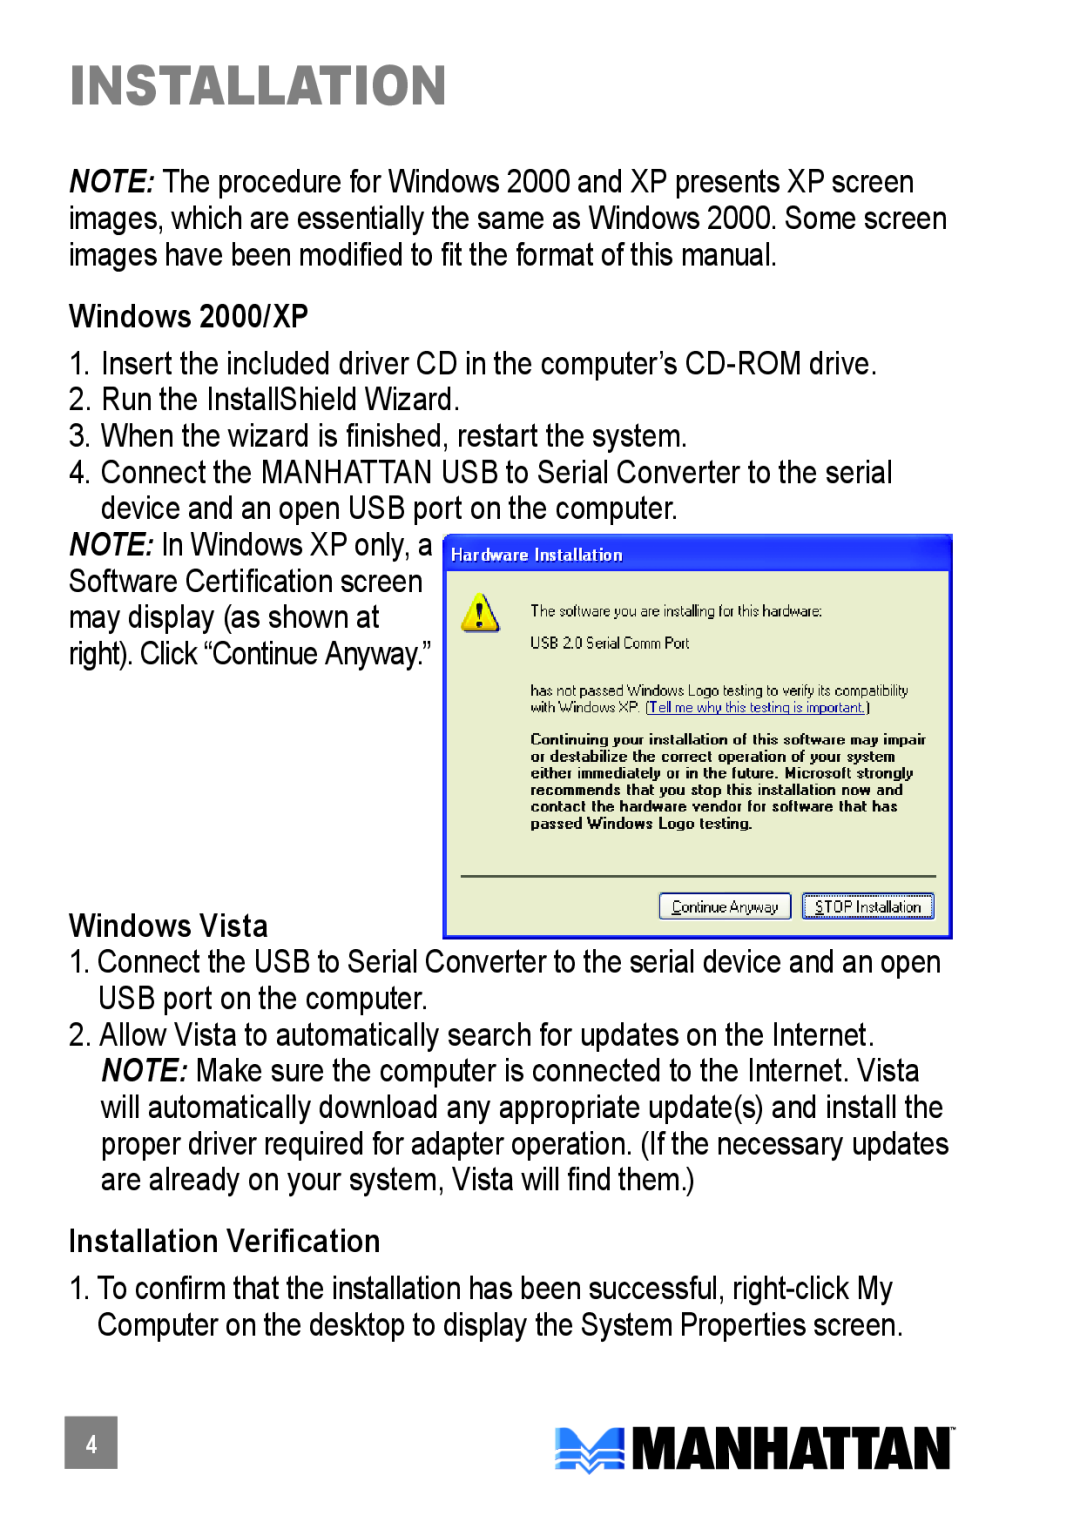 Manhattan Computer Products 205146 user manual installation, Windows 2000/XP, Windows Vista, Installation Verification 